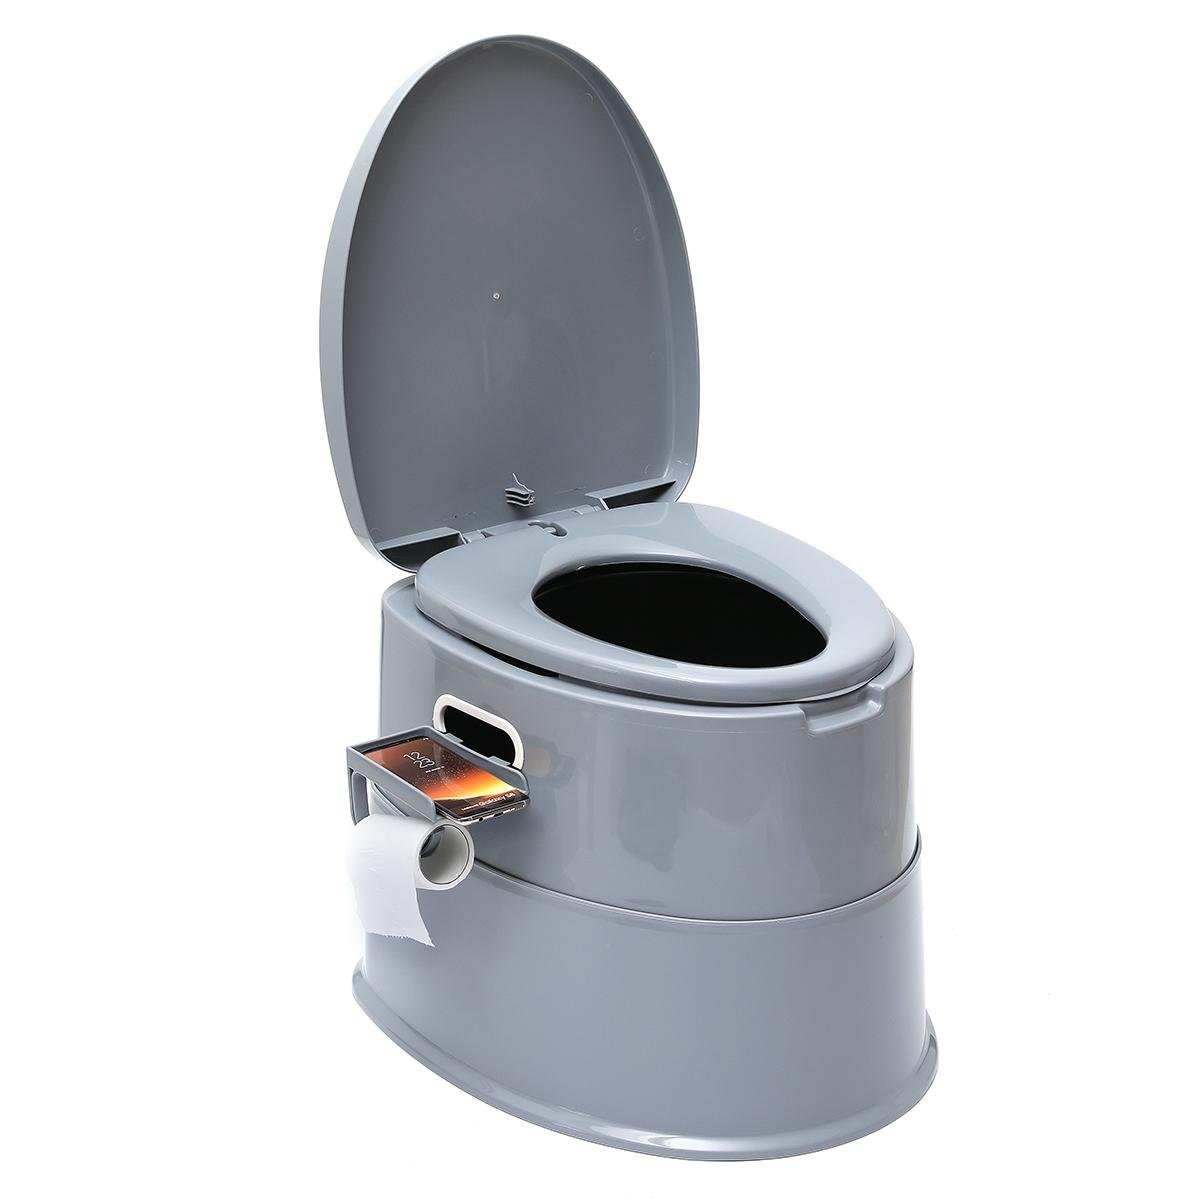 Portable Toilet Bowl Extra Strong Durable